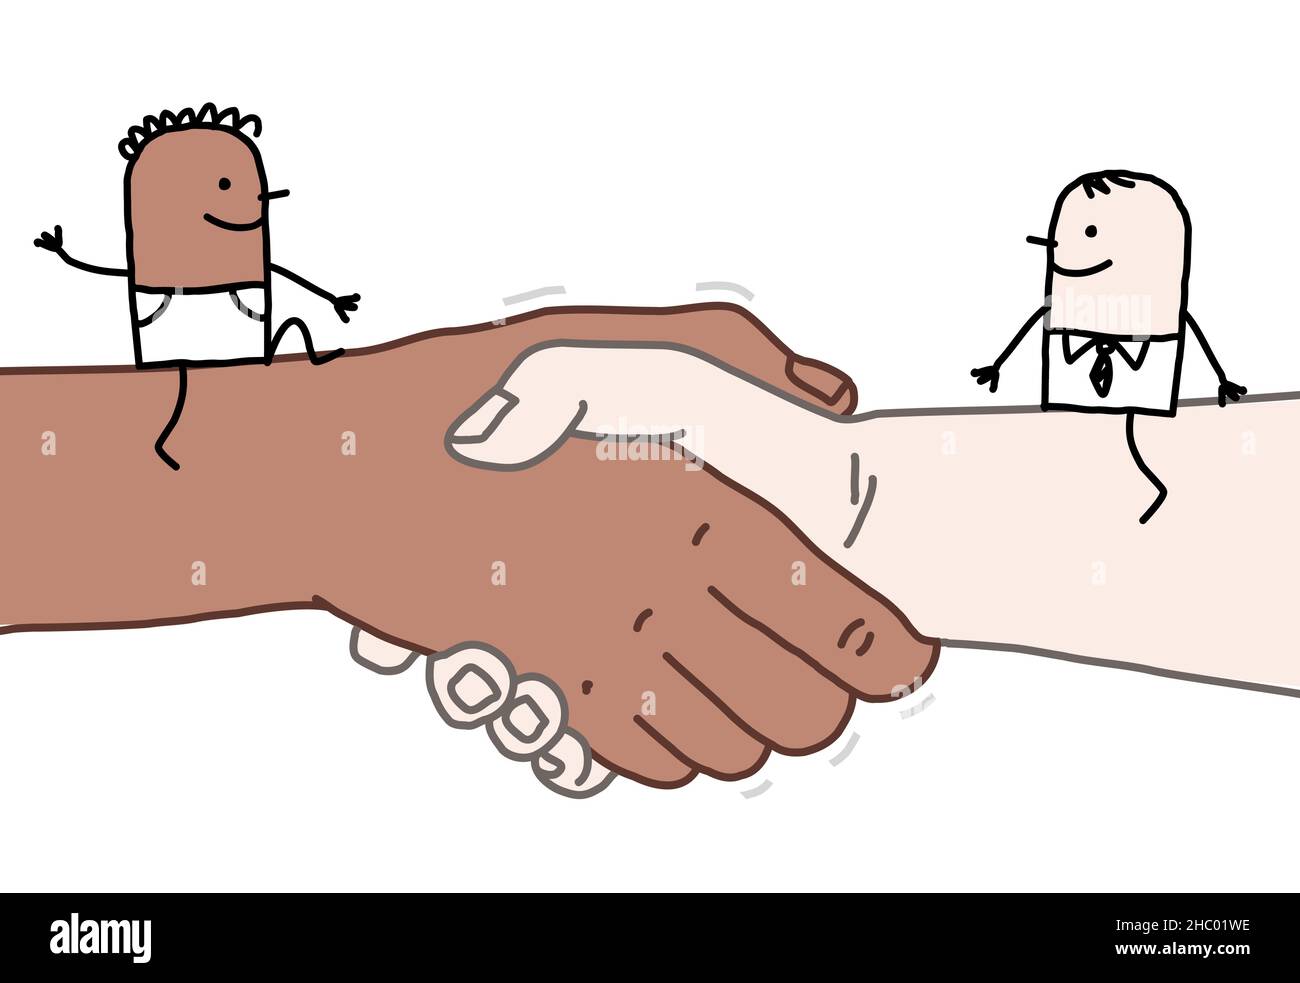 Hand drawn Cartoon Black and White men Meeting on a big Handshake Stock Vector